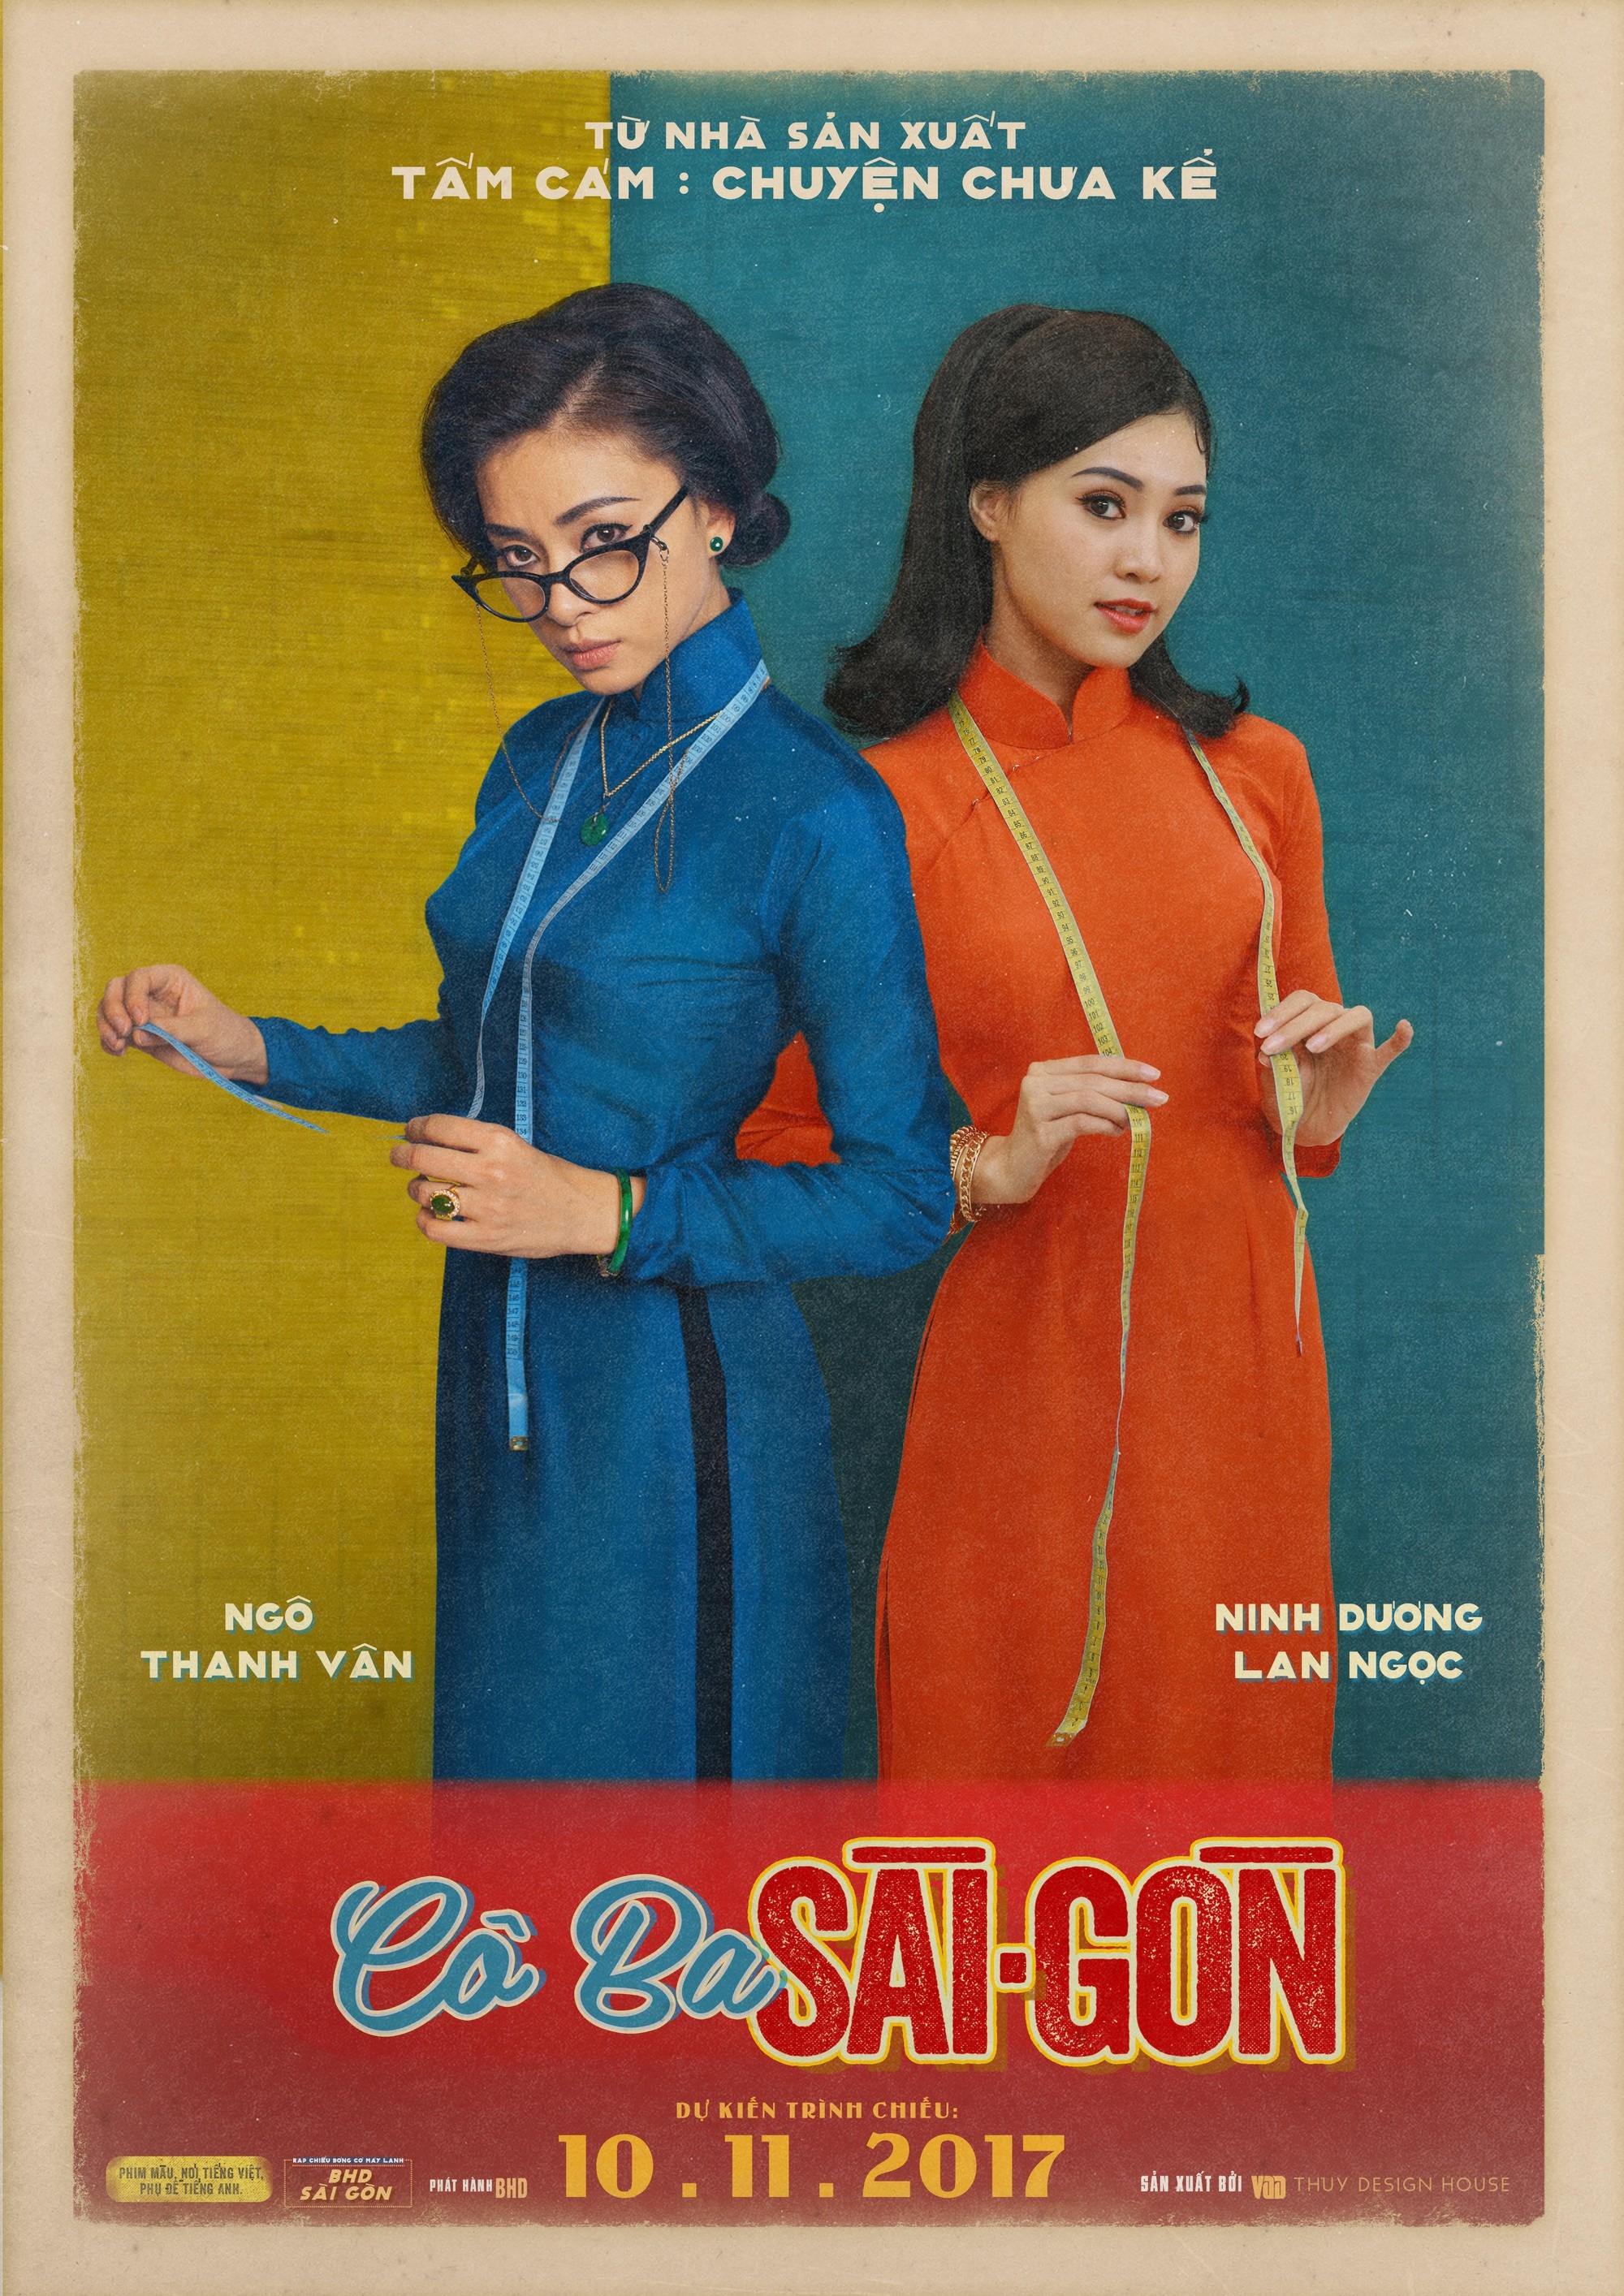 Mega Sized Movie Poster Image for Co Ba Sai Gon (#4 of 7)